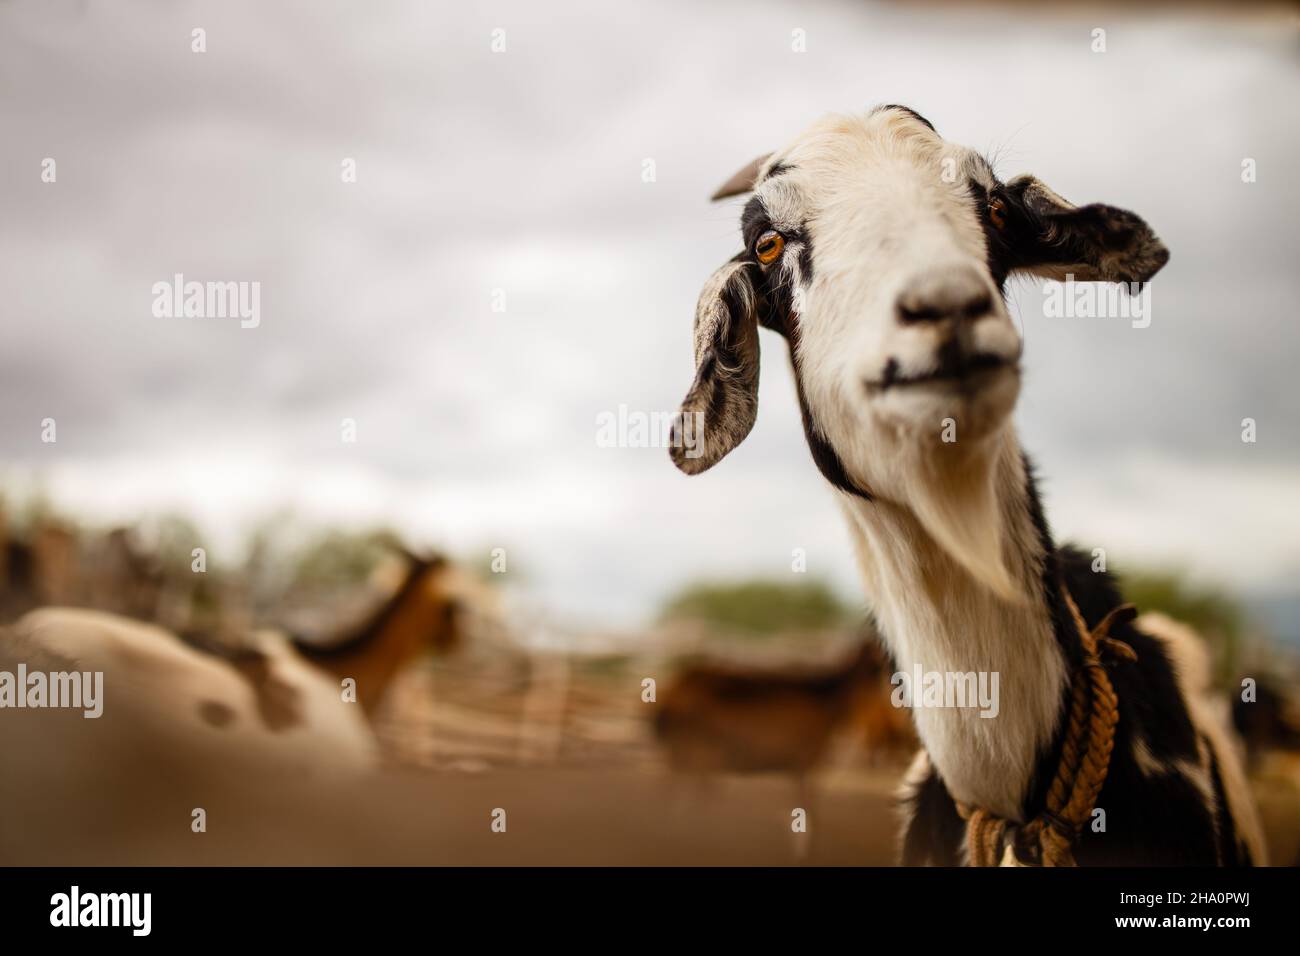 Goat in a field farm Stock Photo